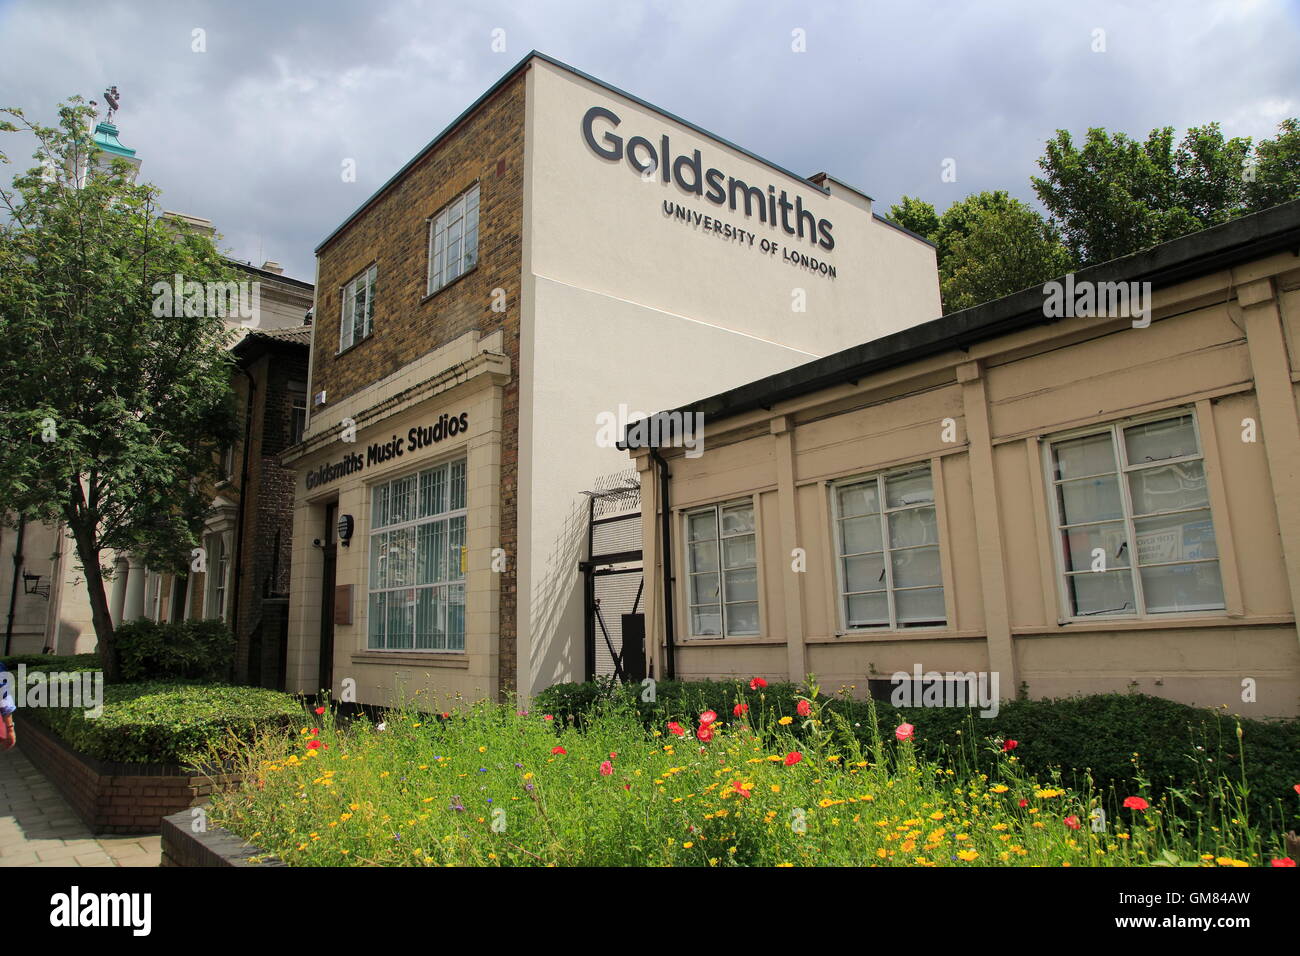 Music studios buildings, Goldsmiths, University of London, England, UK Stock Photo